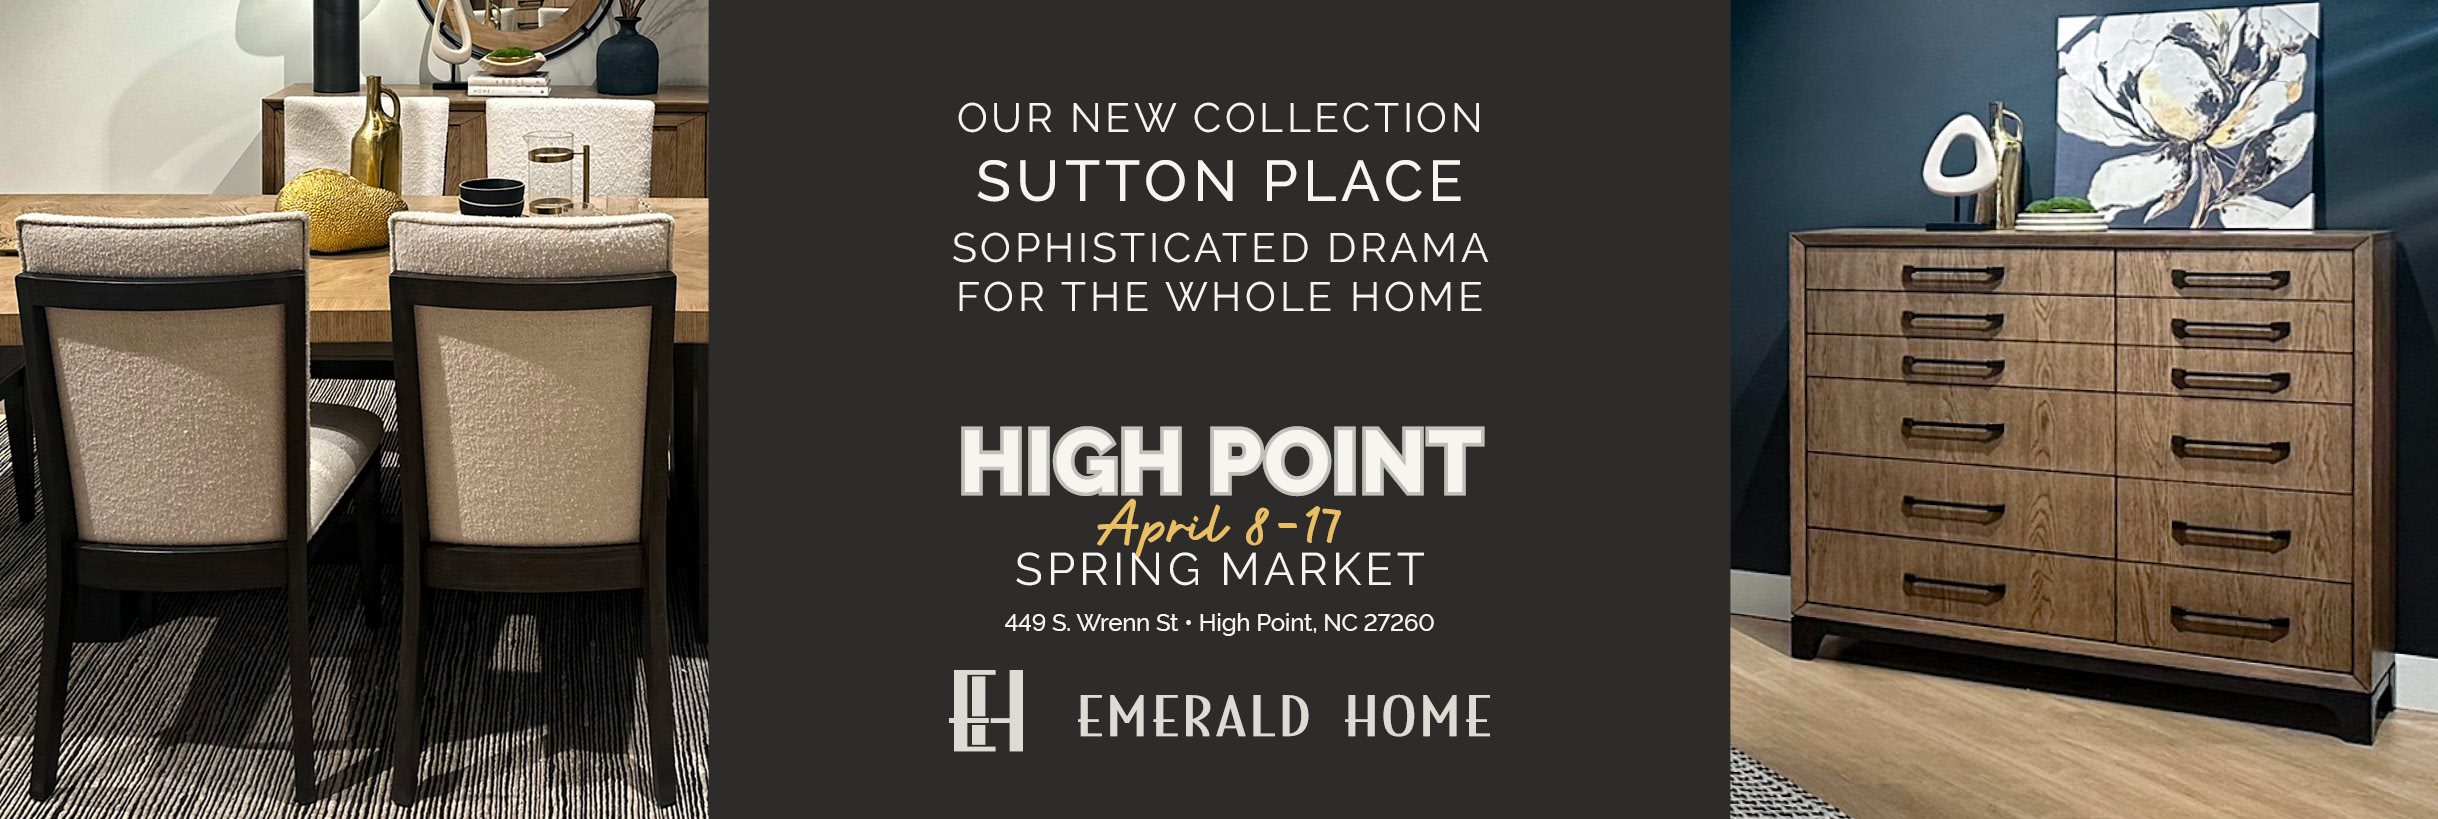 HP Spring Market April 8 - 17, New Whole Home Sutton Place